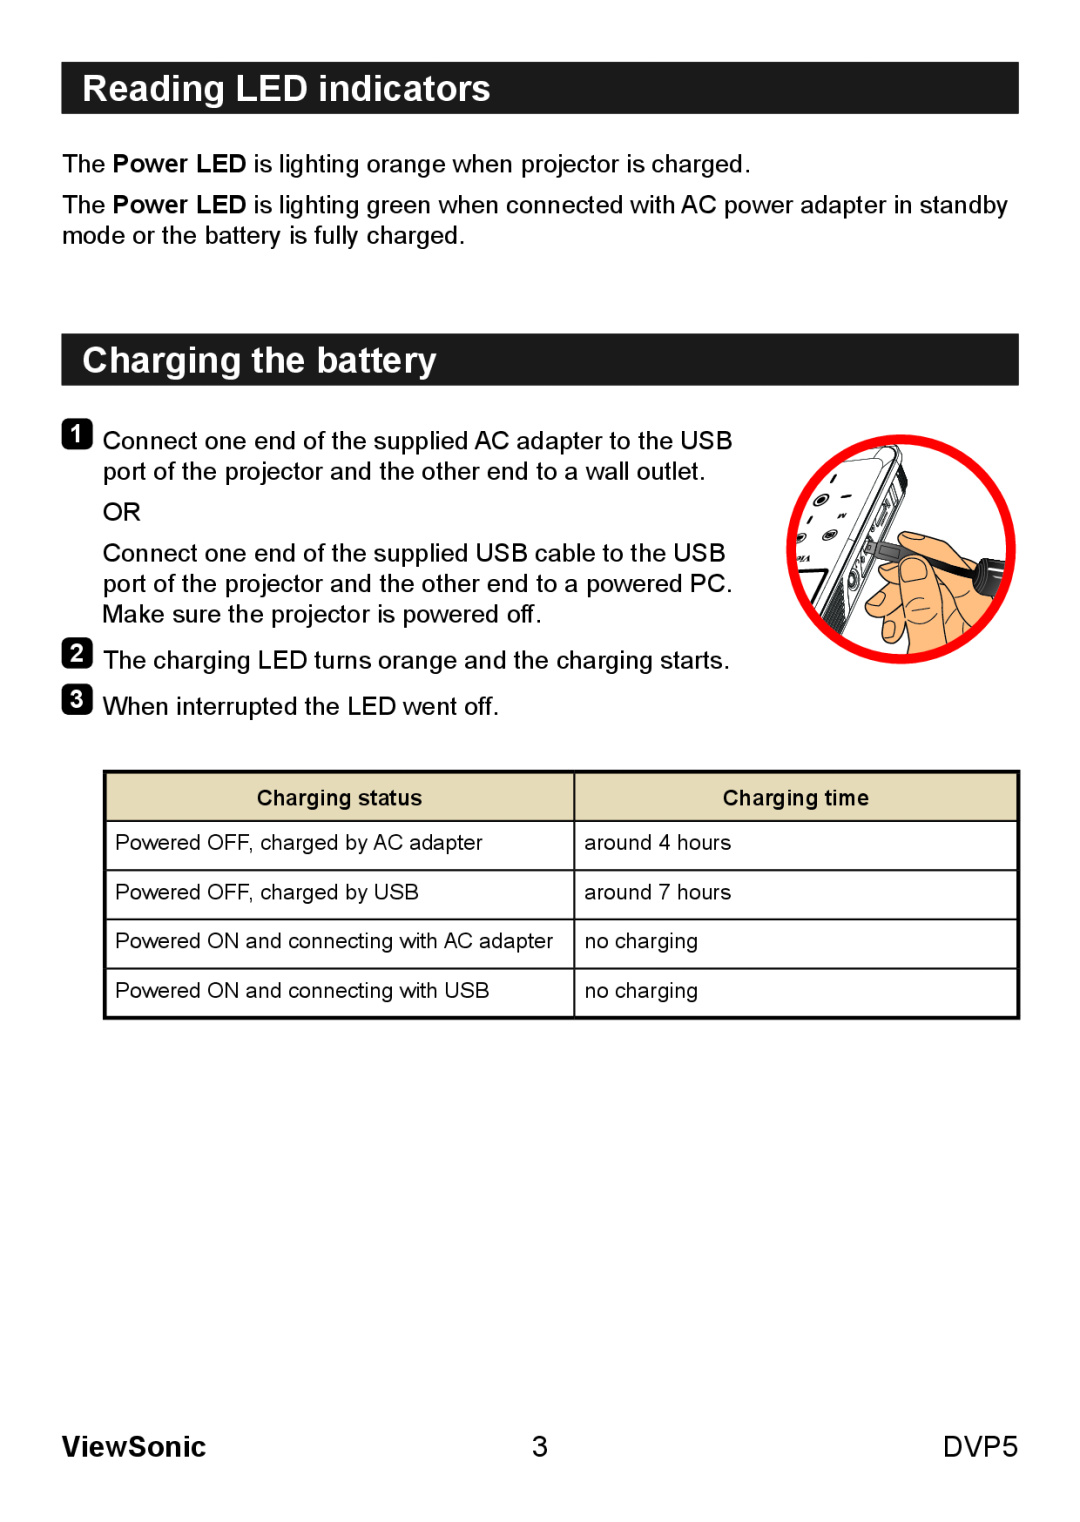 ViewSonic VS13783 warranty Reading LED indicators, Charging the battery, ViewSonic, DVP5 